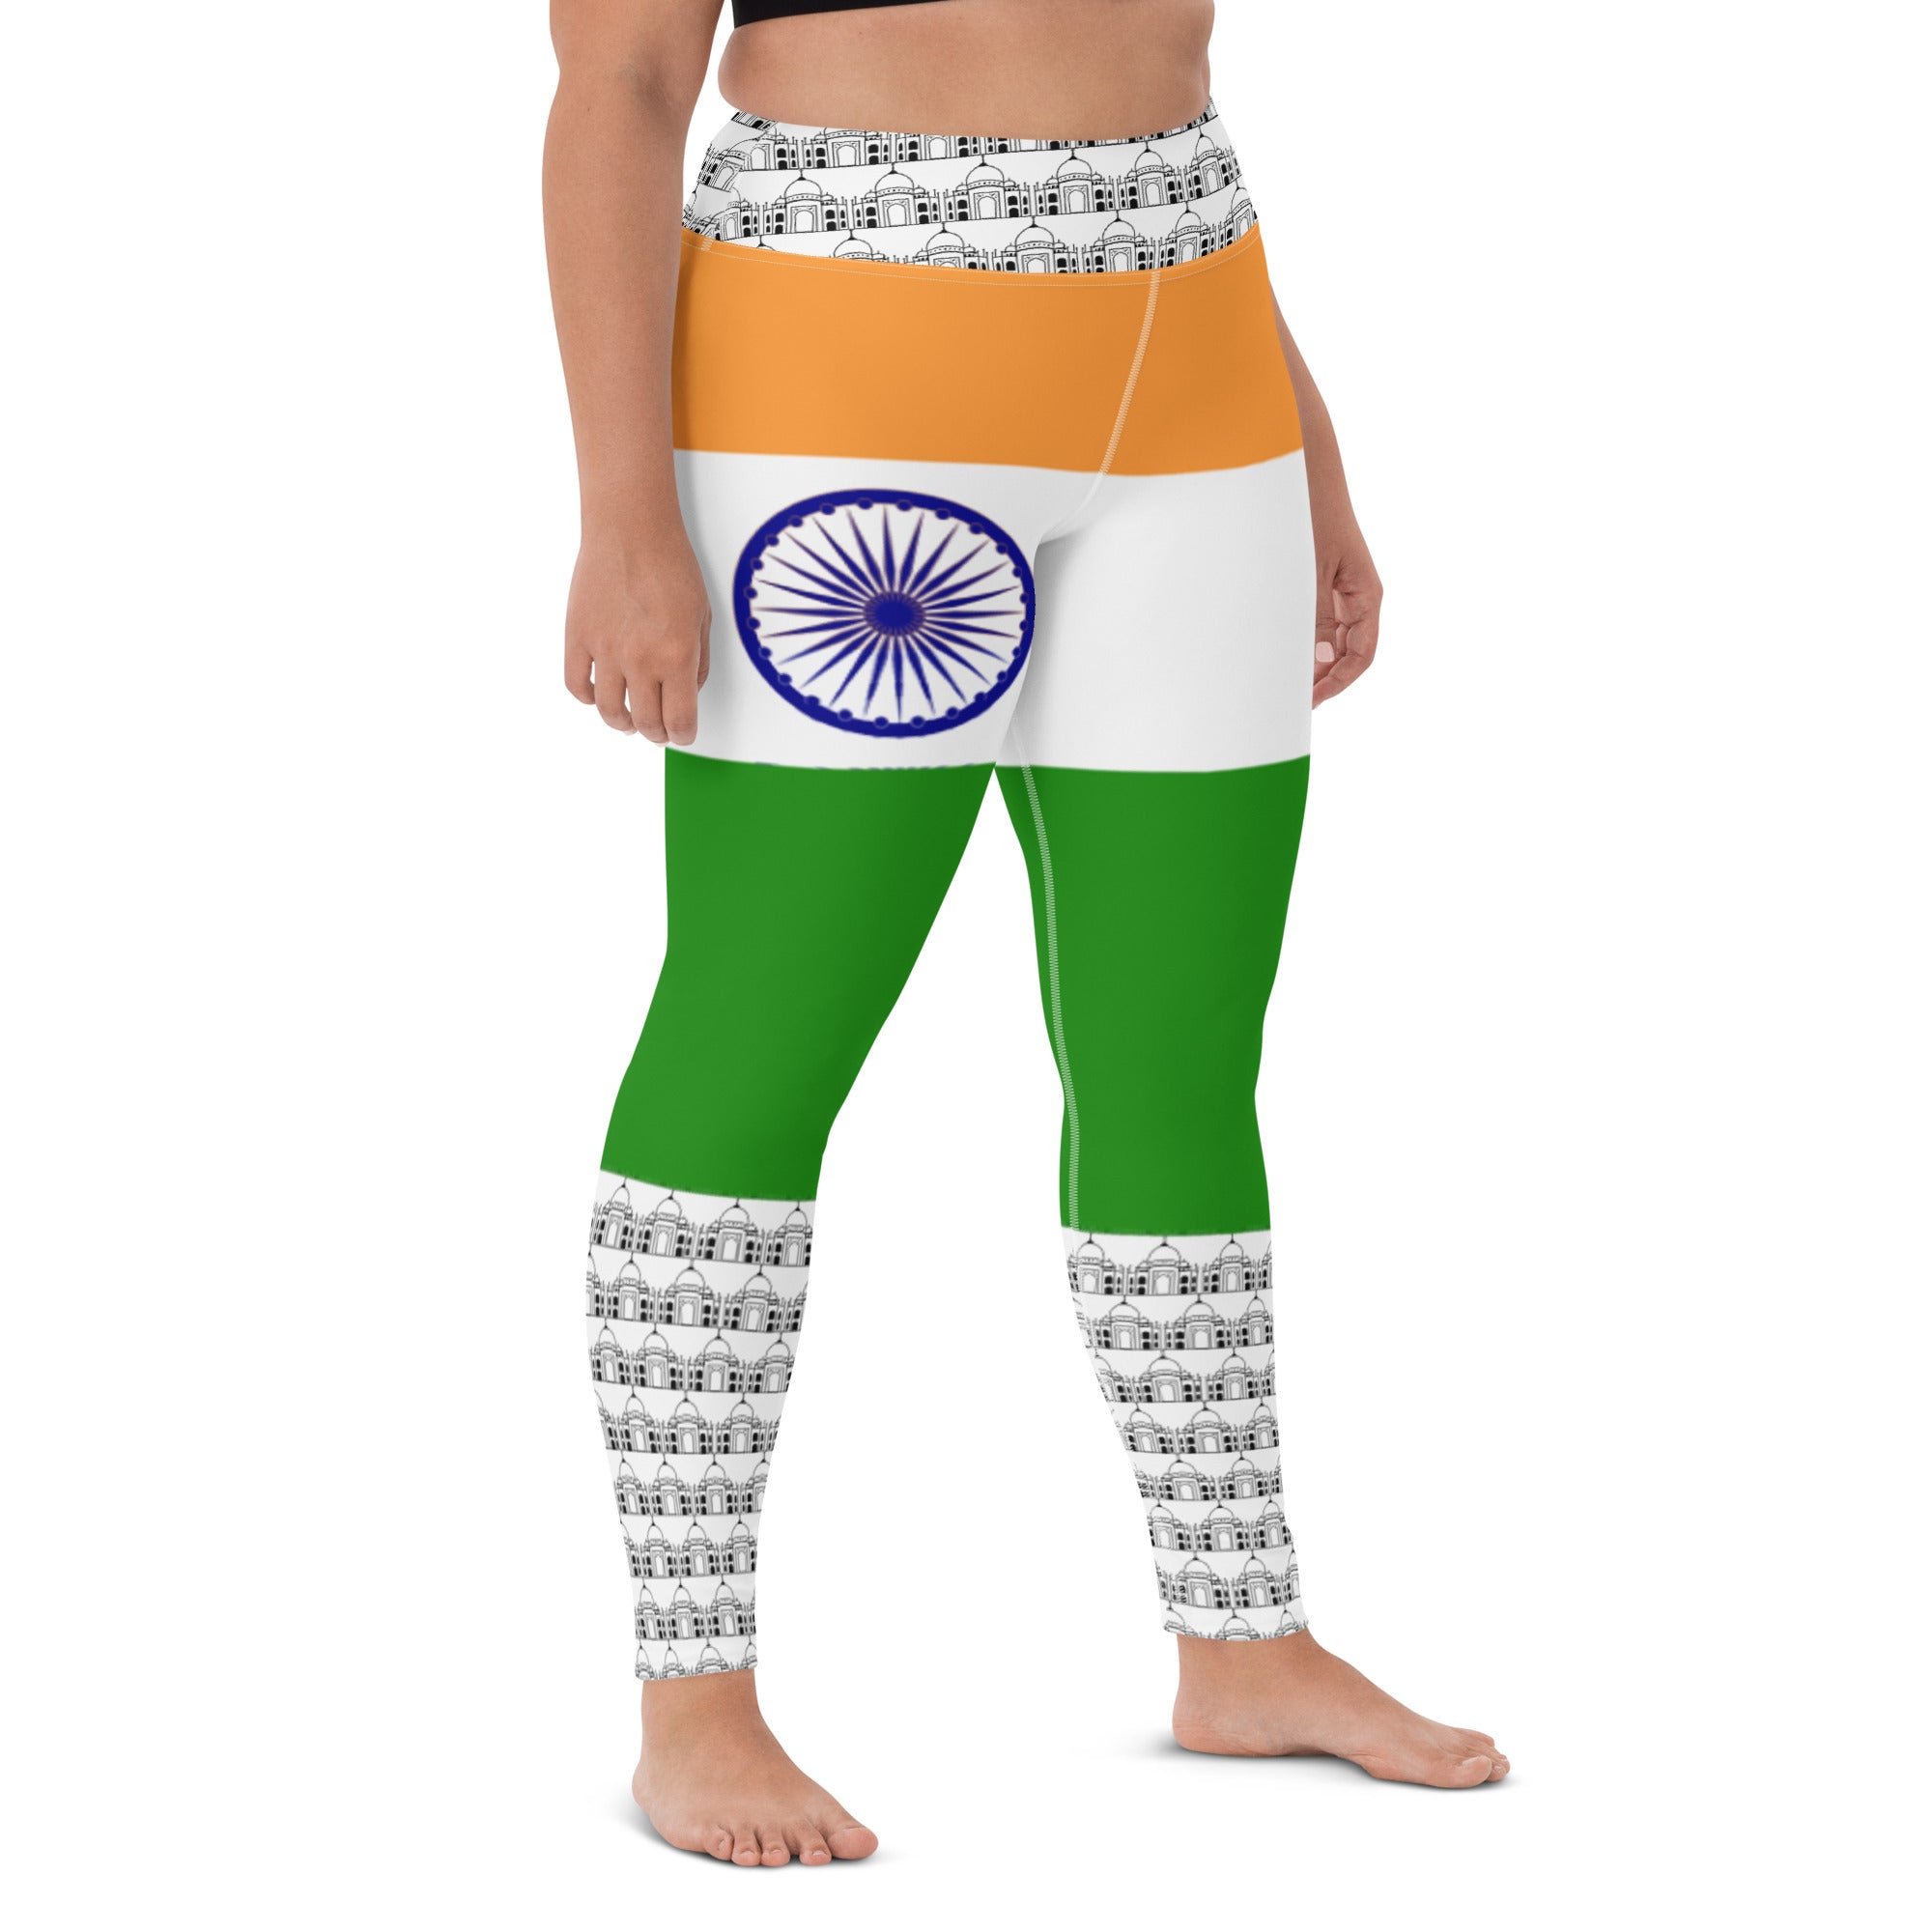 Fidato Pack of 3 Women's Churidar Leggings (Multi Color, S) - FDWALCOMBO17  Price - Buy Online at Best Price in India